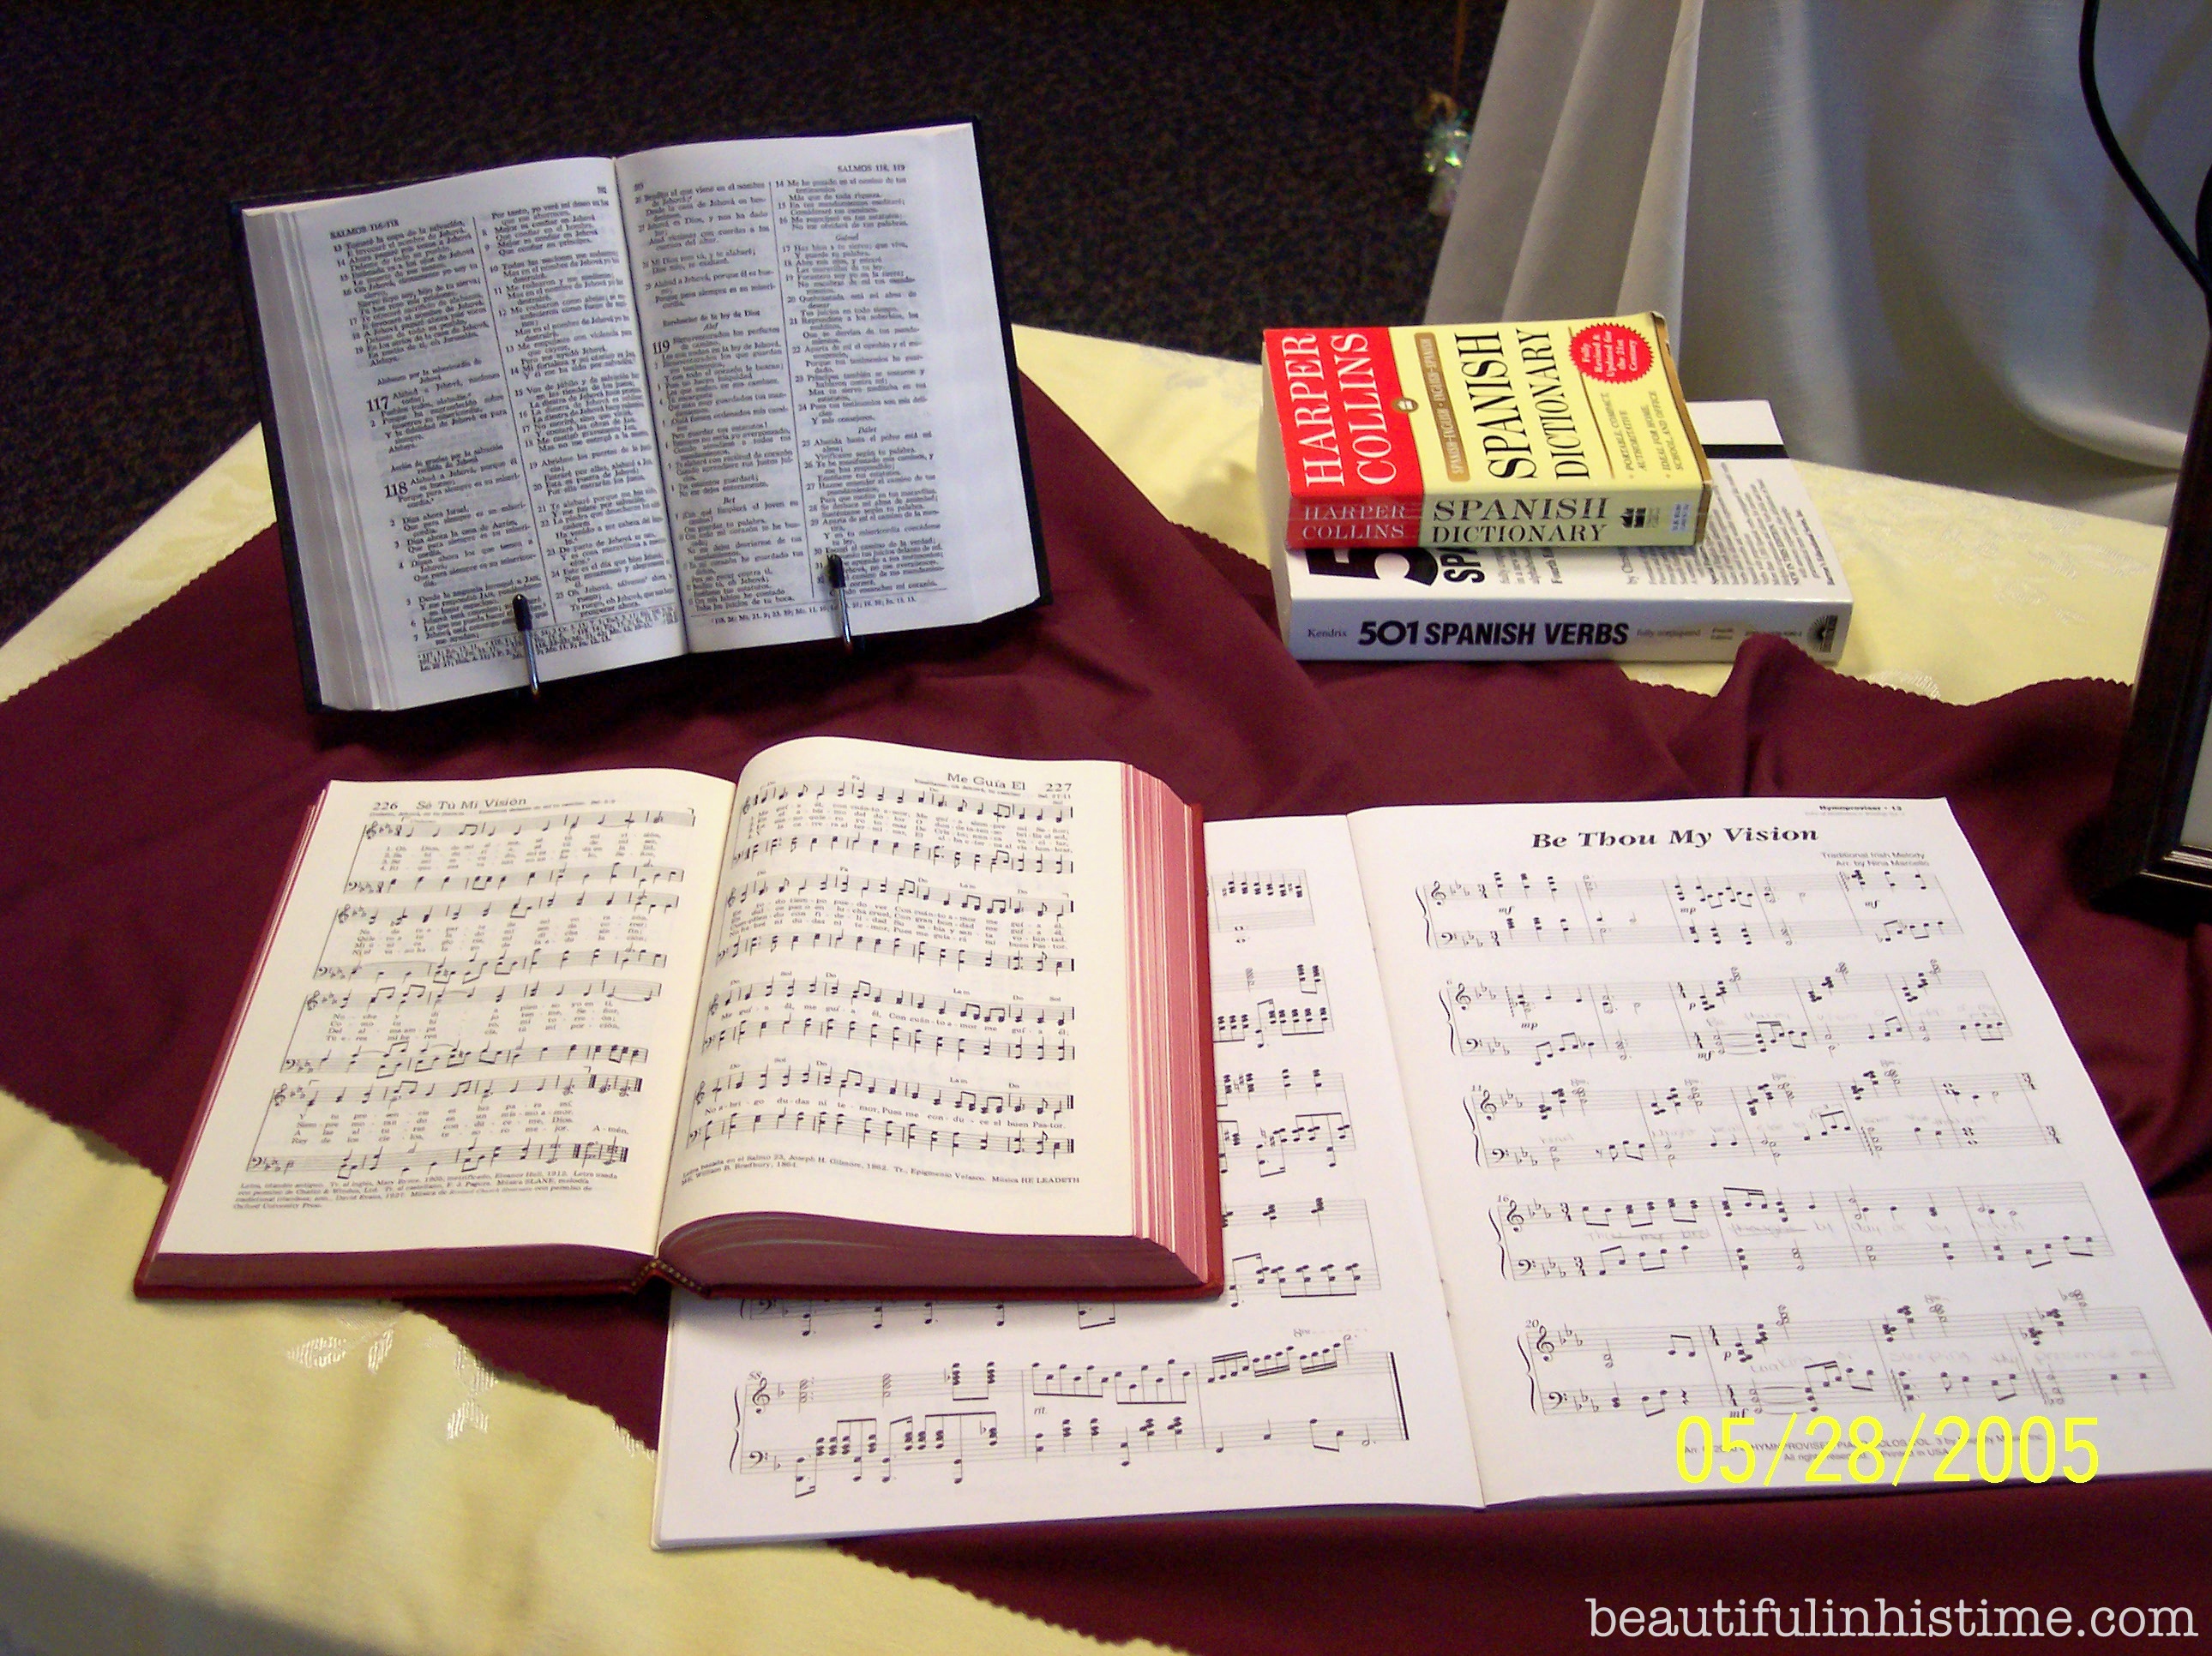 Spanish hymnal and Bible